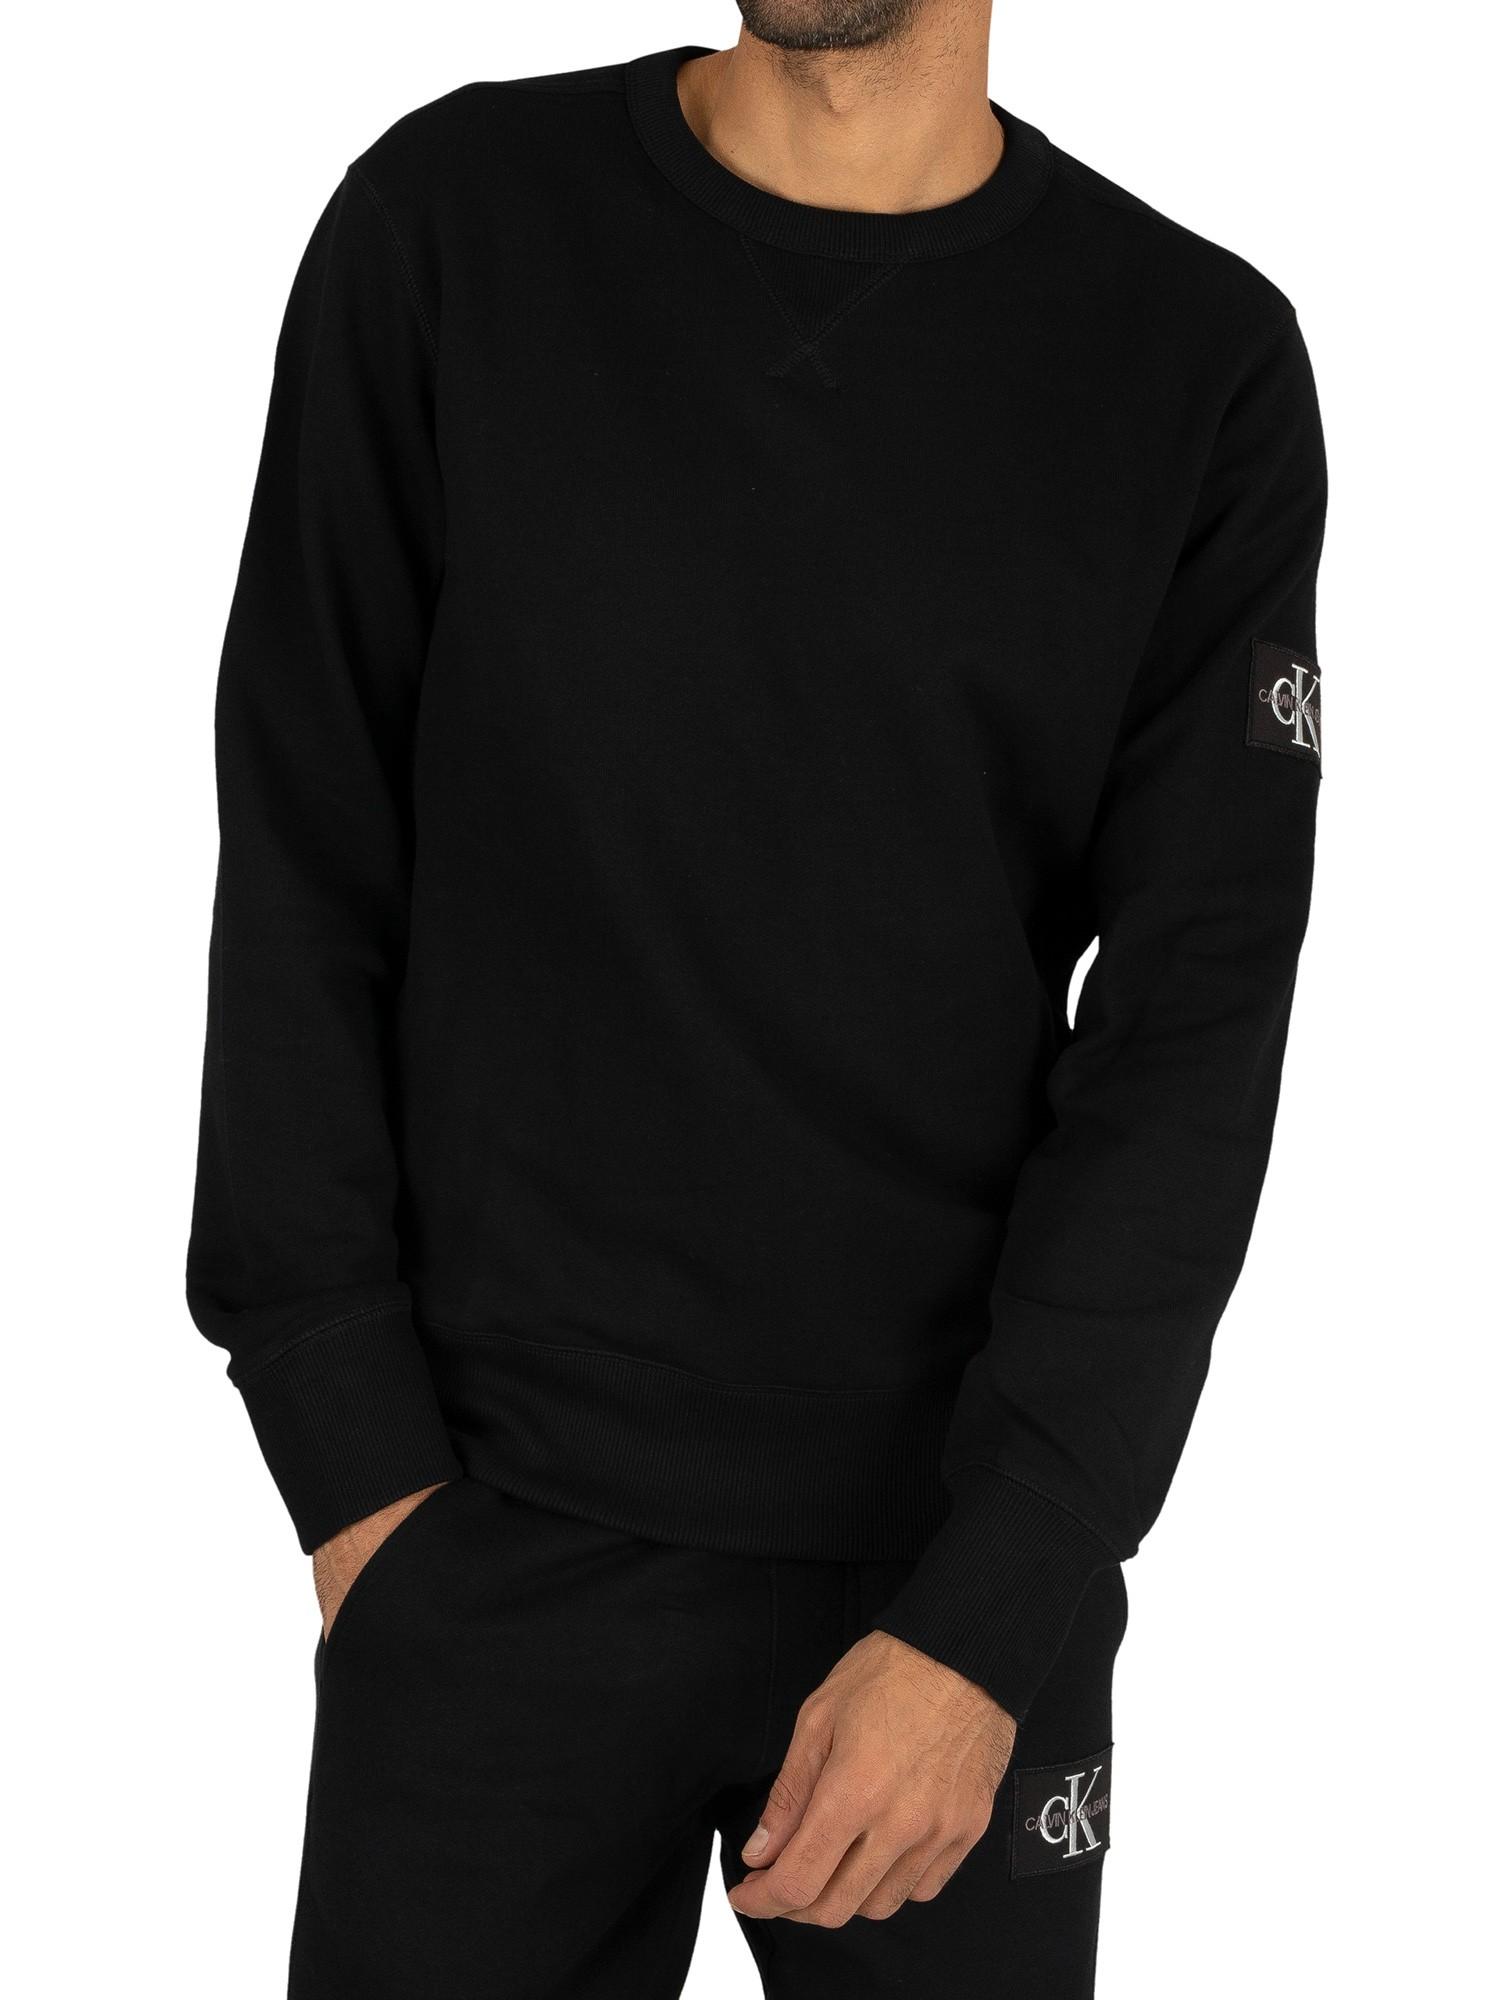 Calvin Klein Denim Monogram Sleeve Badge Sweatshirt in Black for Men - Lyst